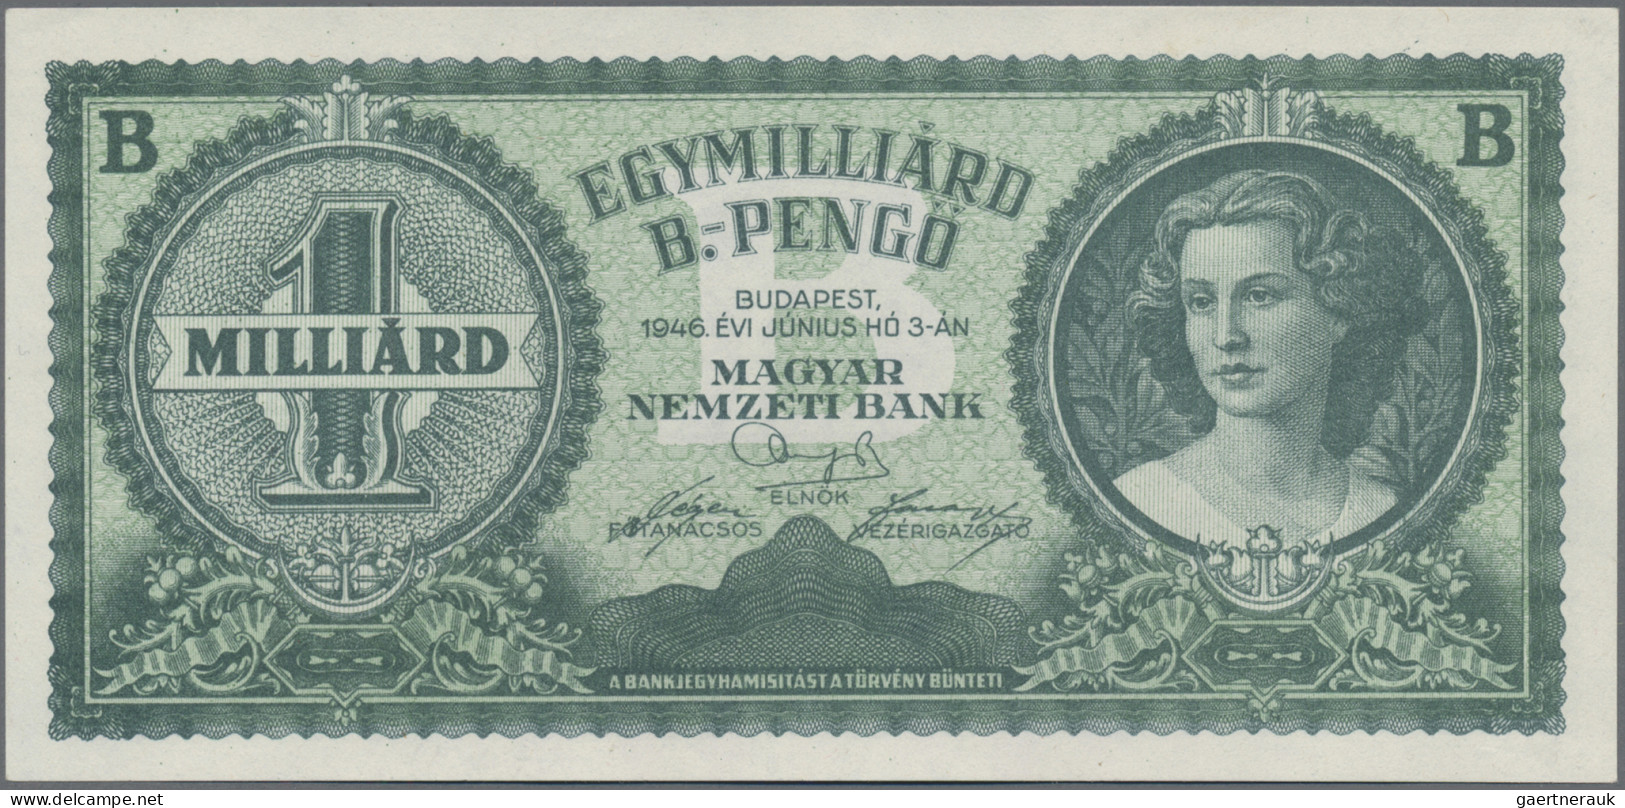 Hungary: Magyar Nemzeti Bank Egymilliard (1.000.000.000) B.-Pengő (=1.000.000.00 - Hongrie